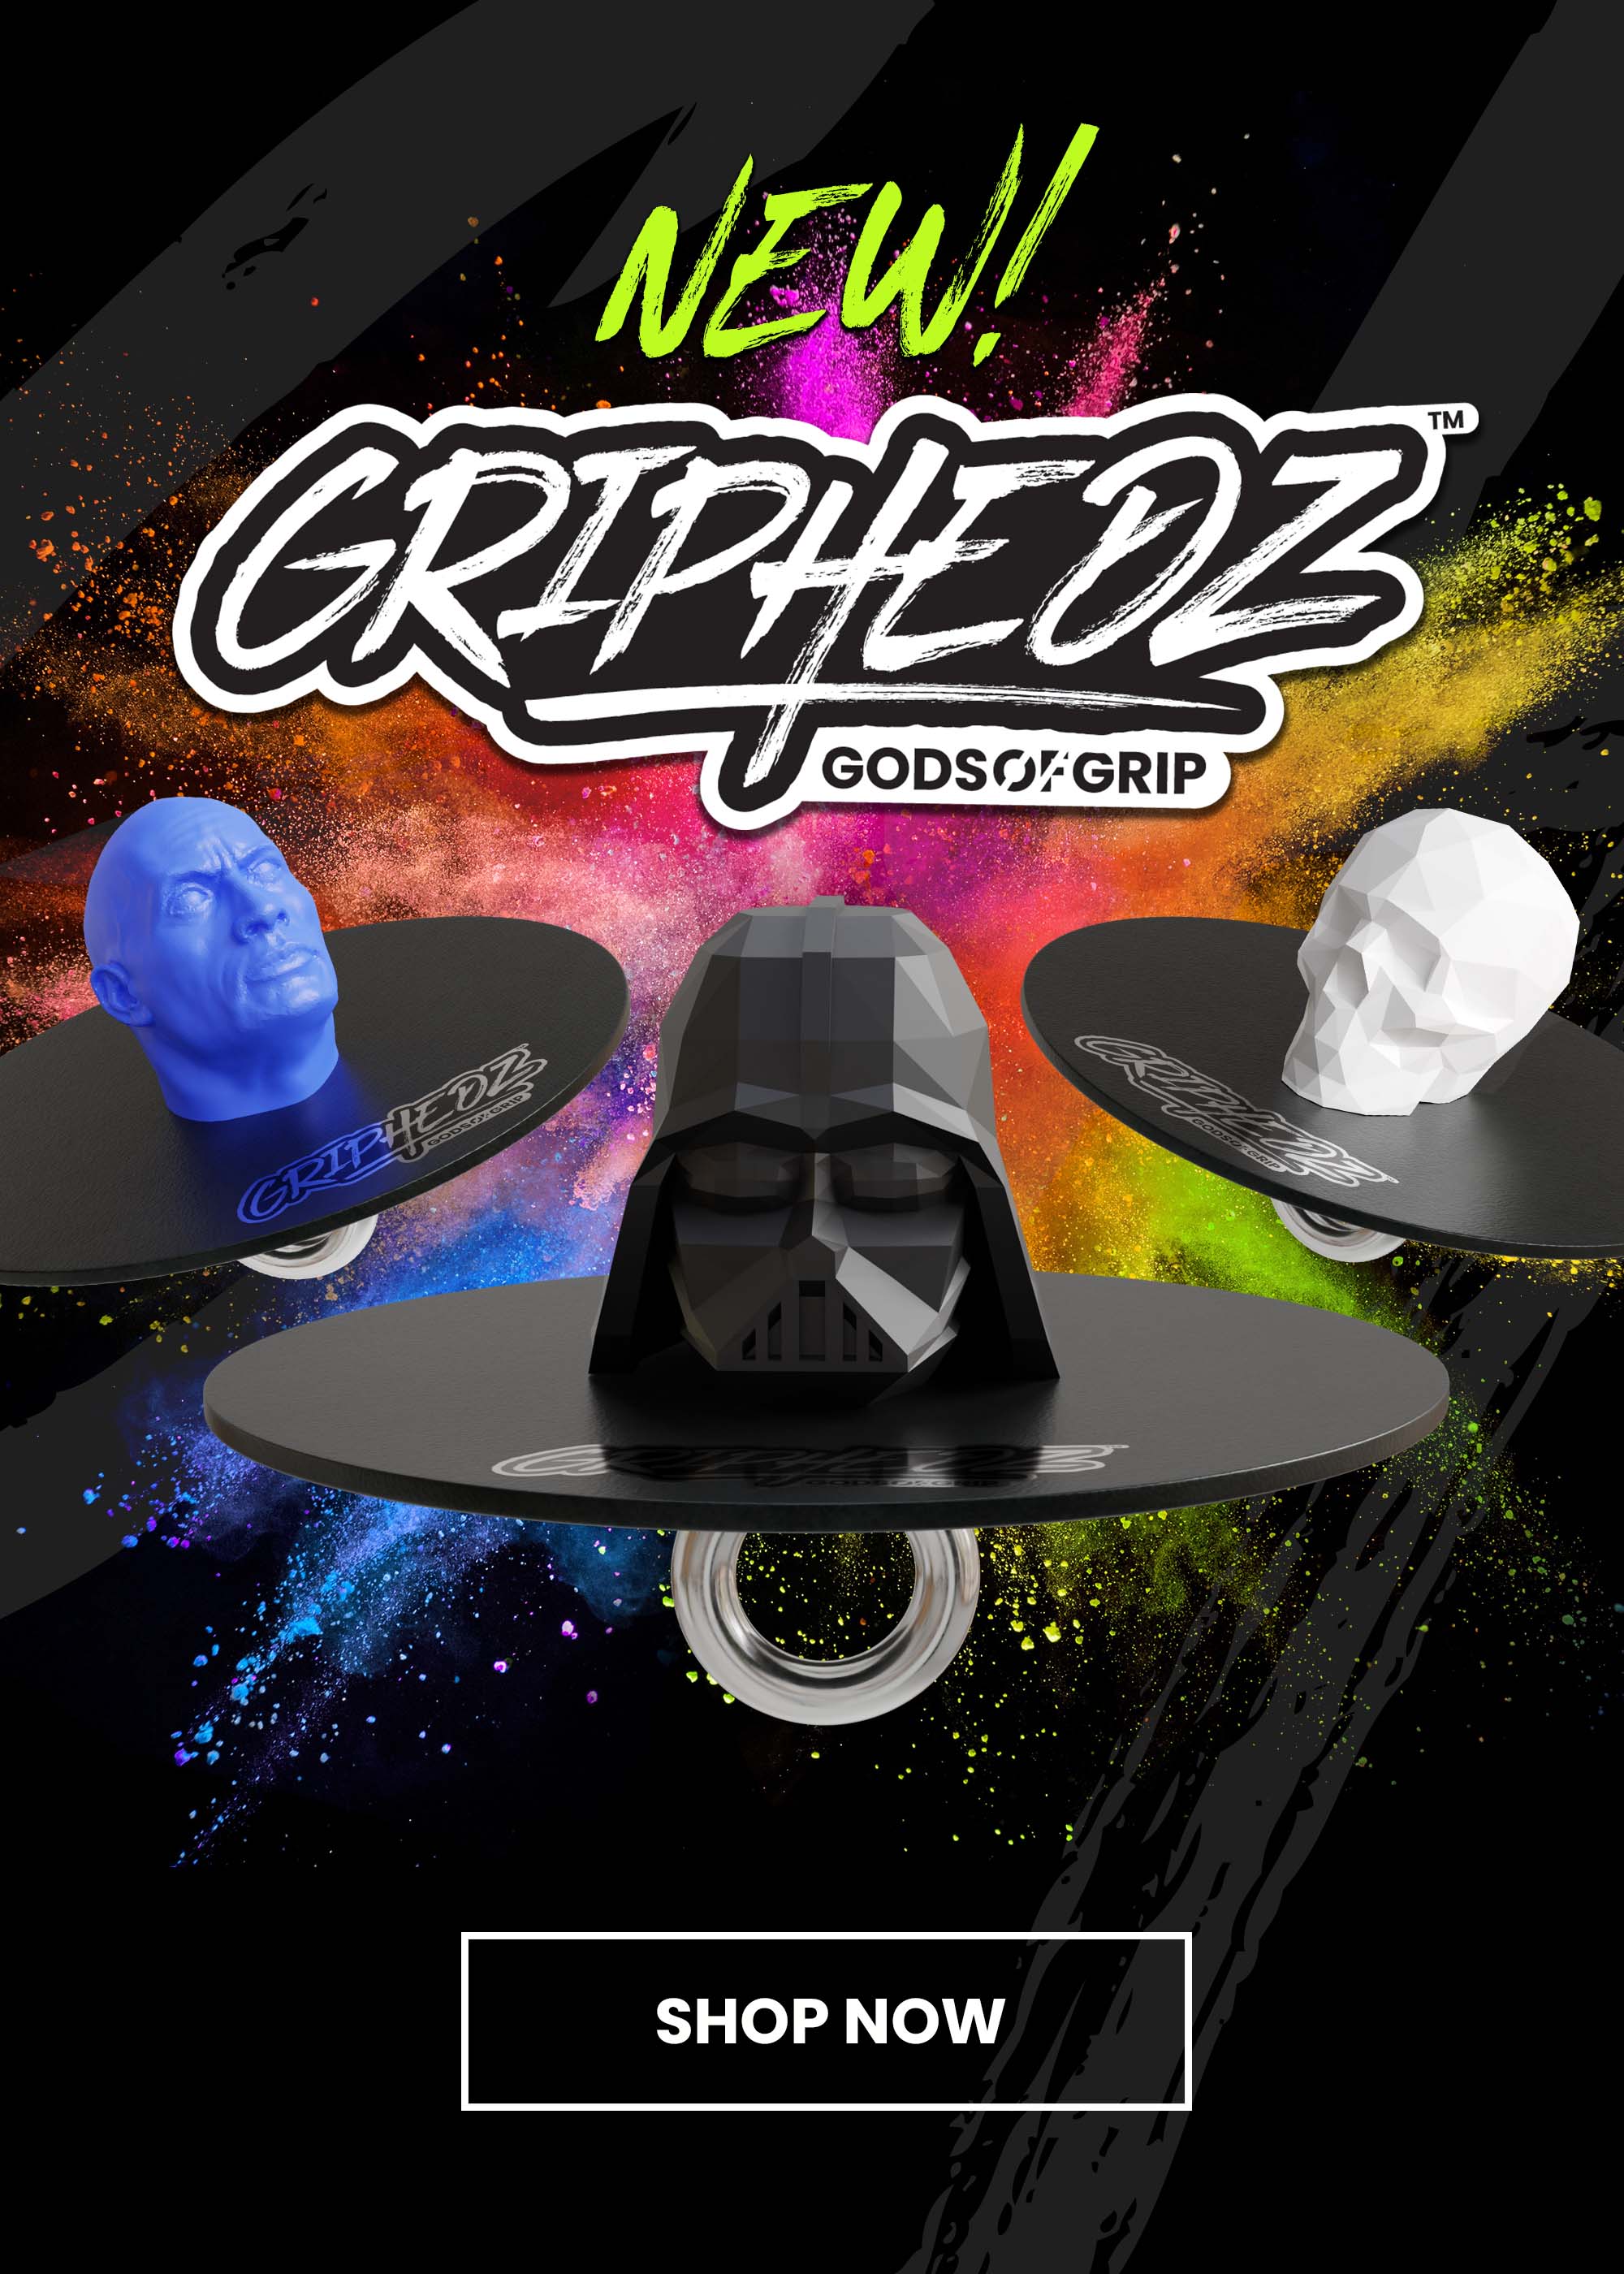 GripHedz Mobile Banner